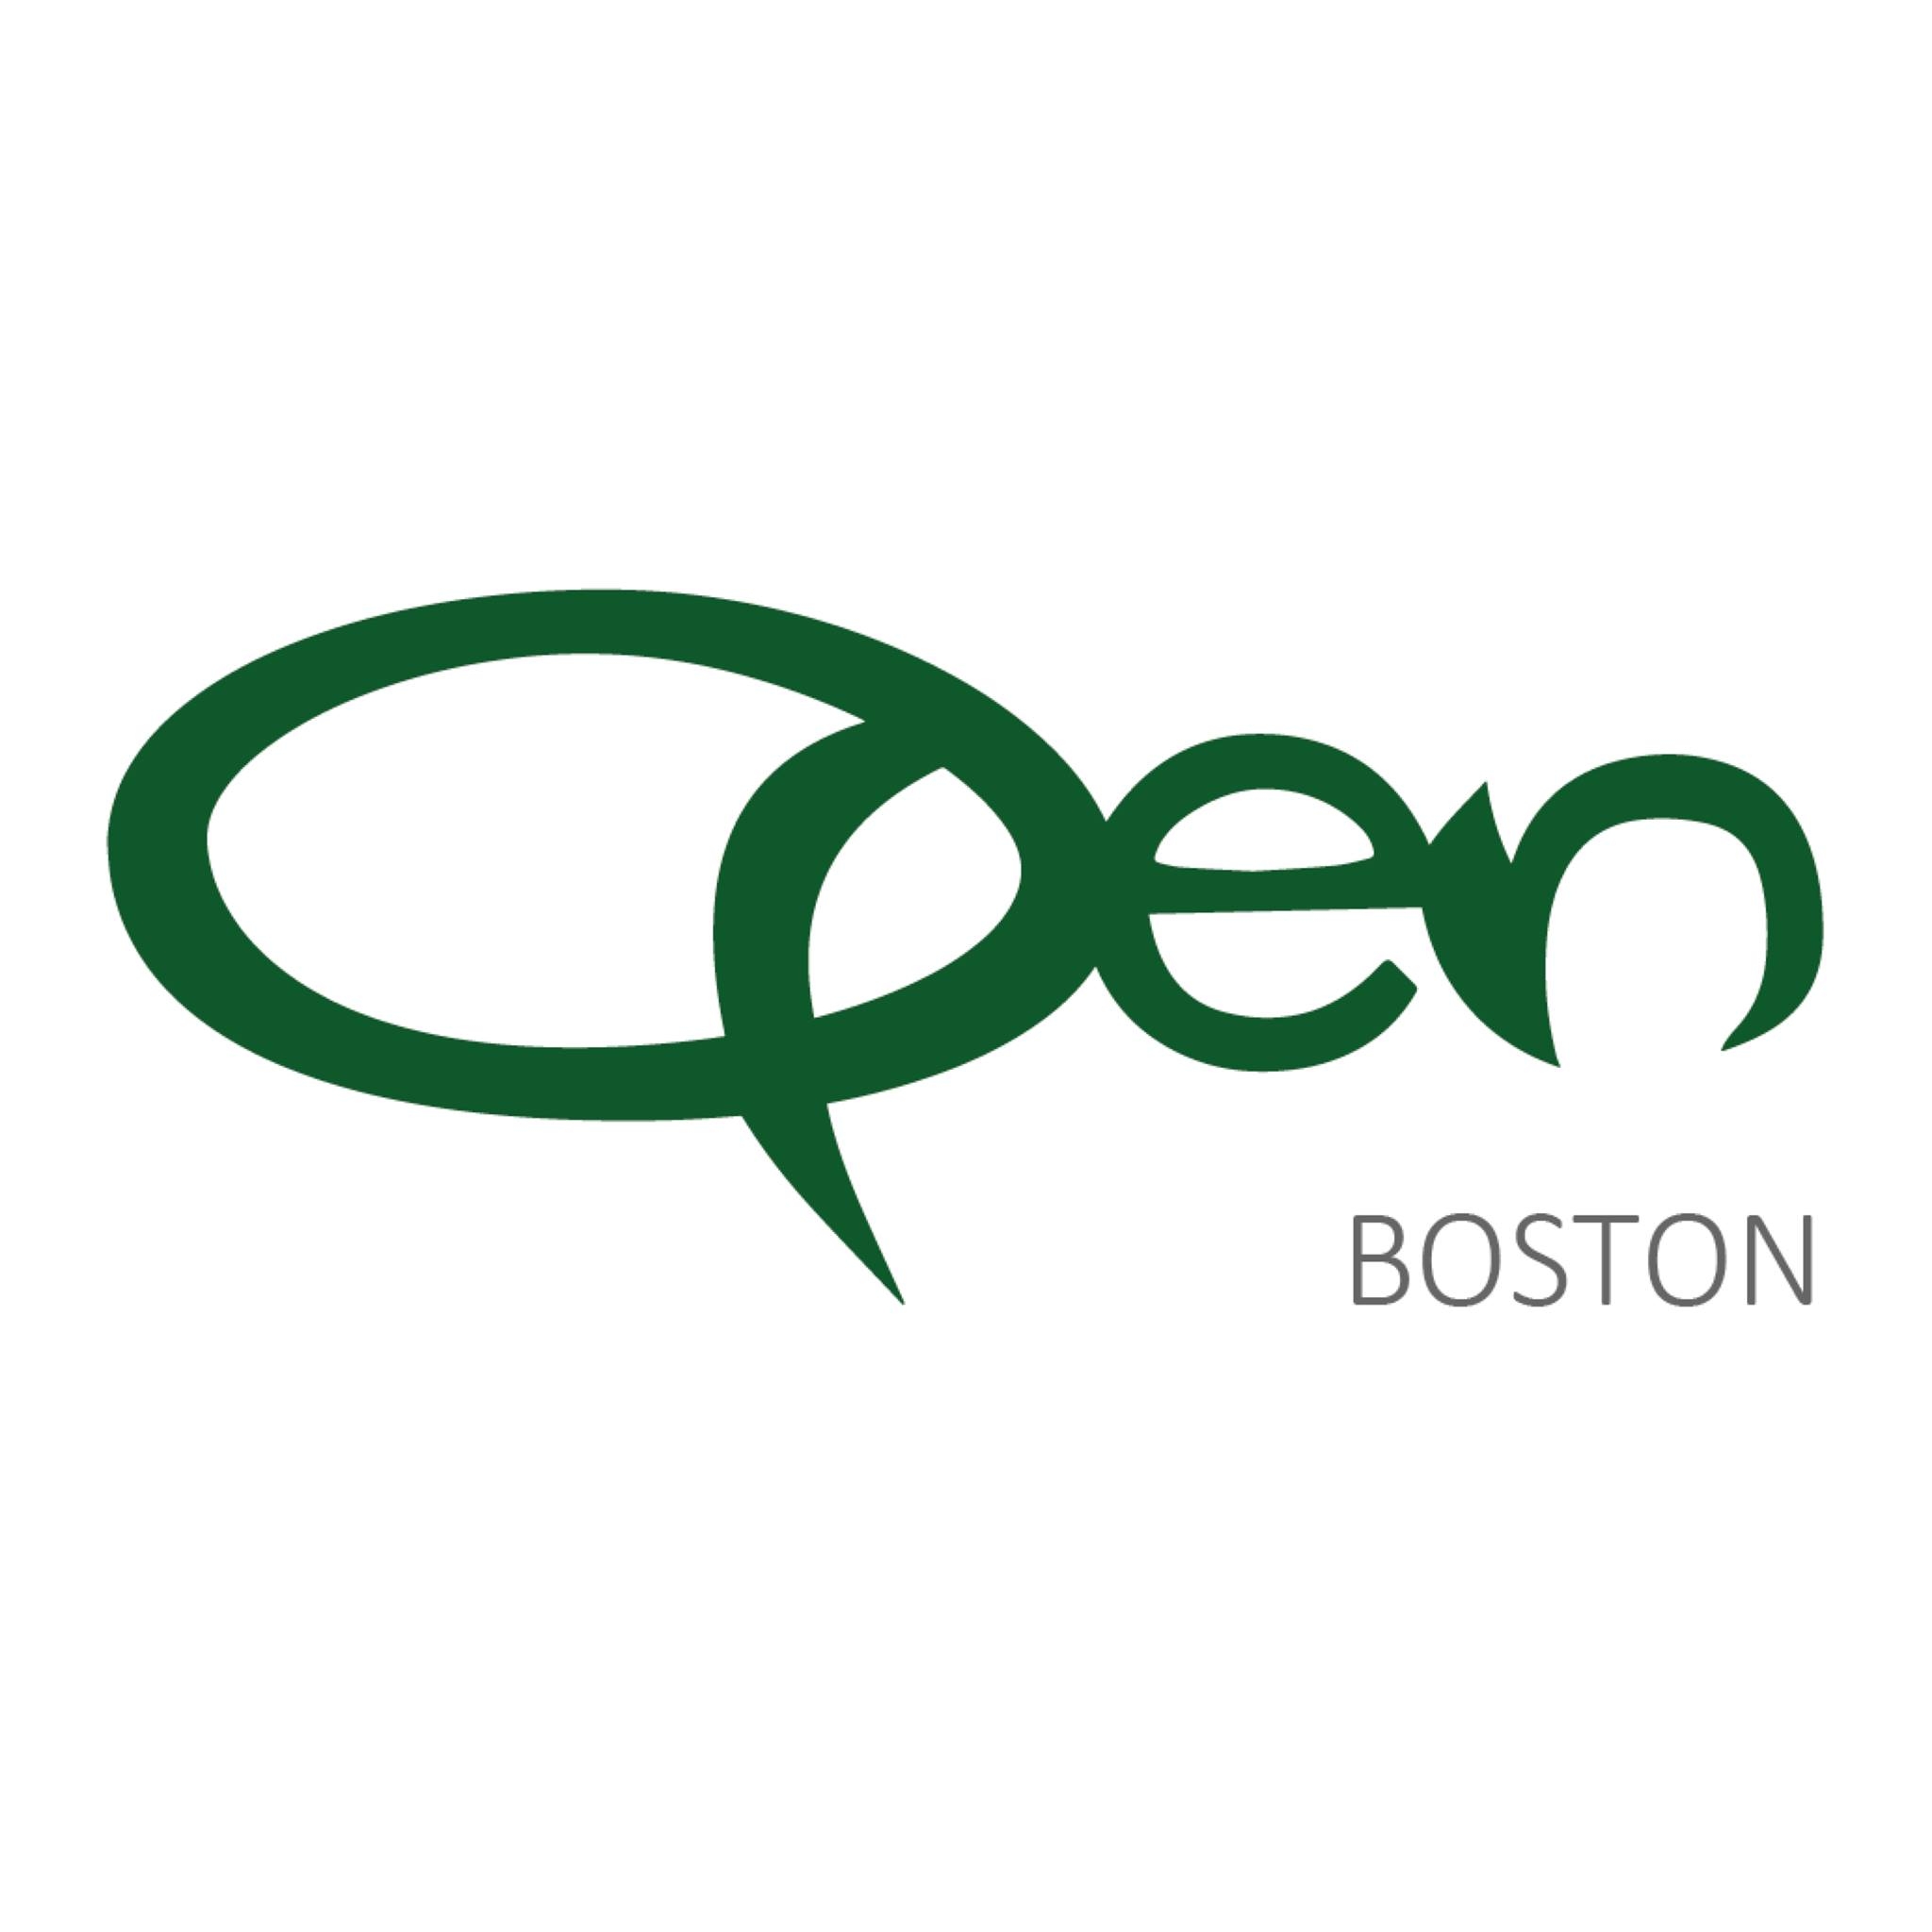 Pakistani Organization in USA - Organization of Pakistani Entrepreneurs Boston